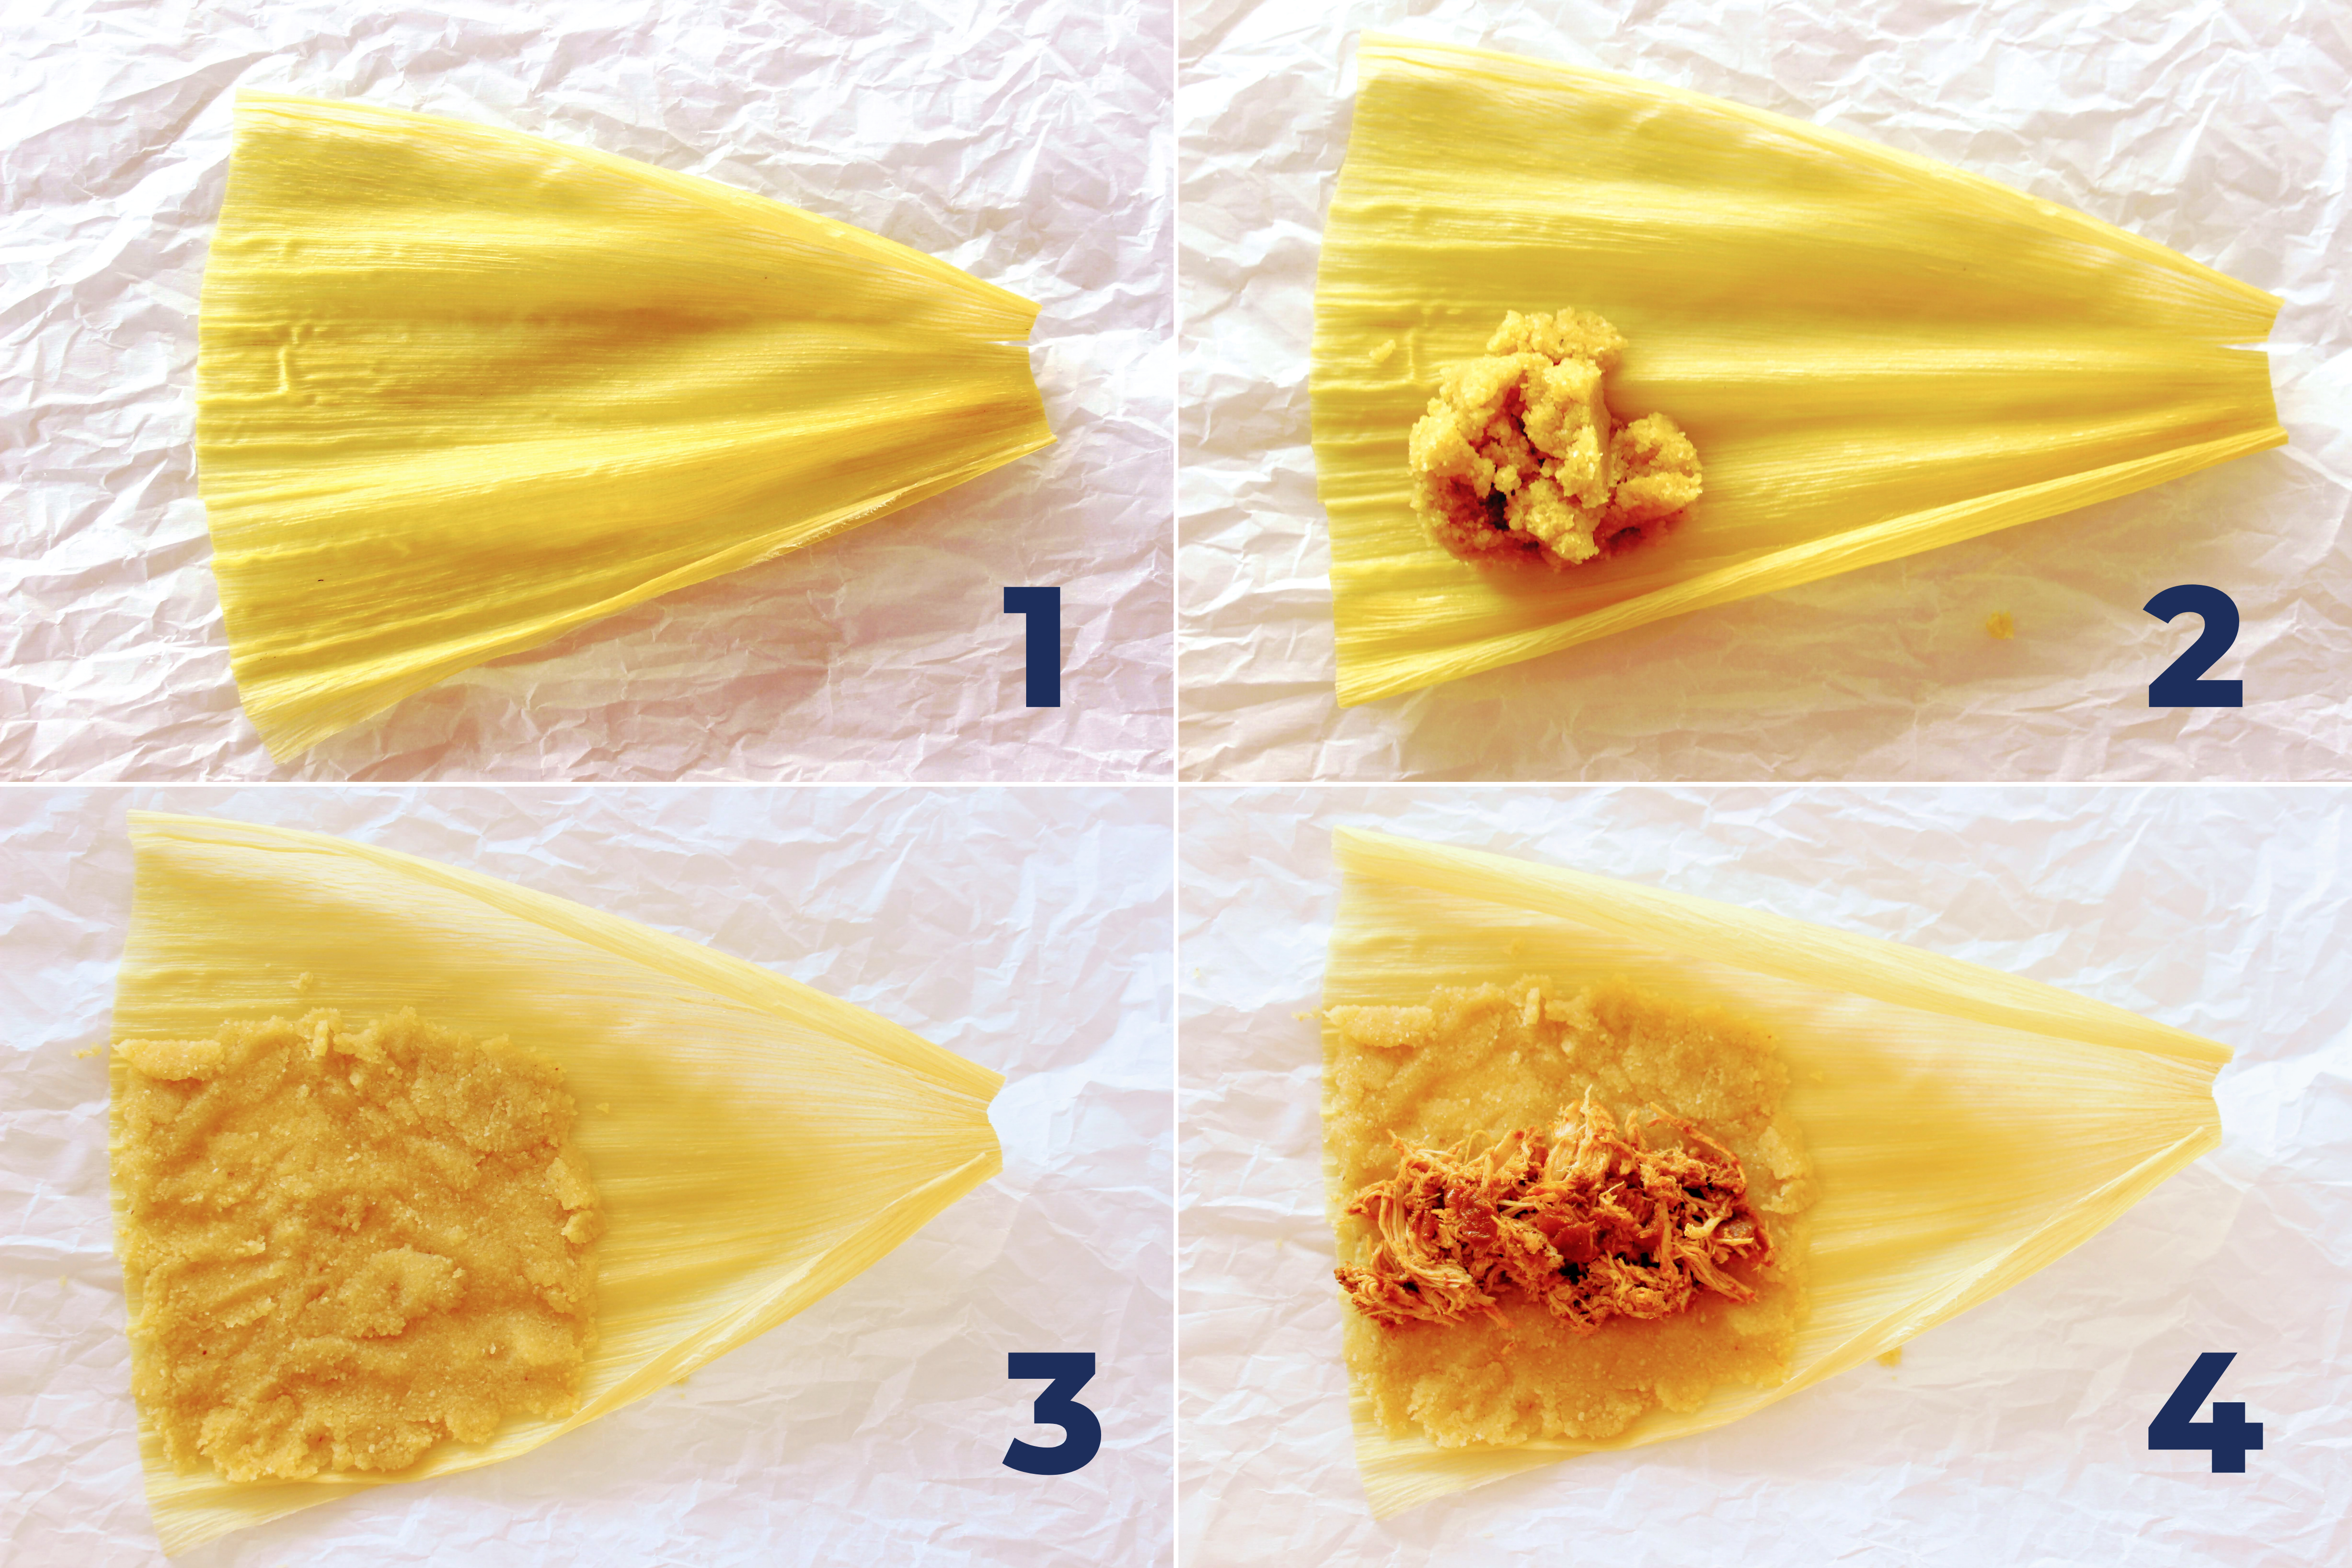 How to make keto tamales steps 1-4